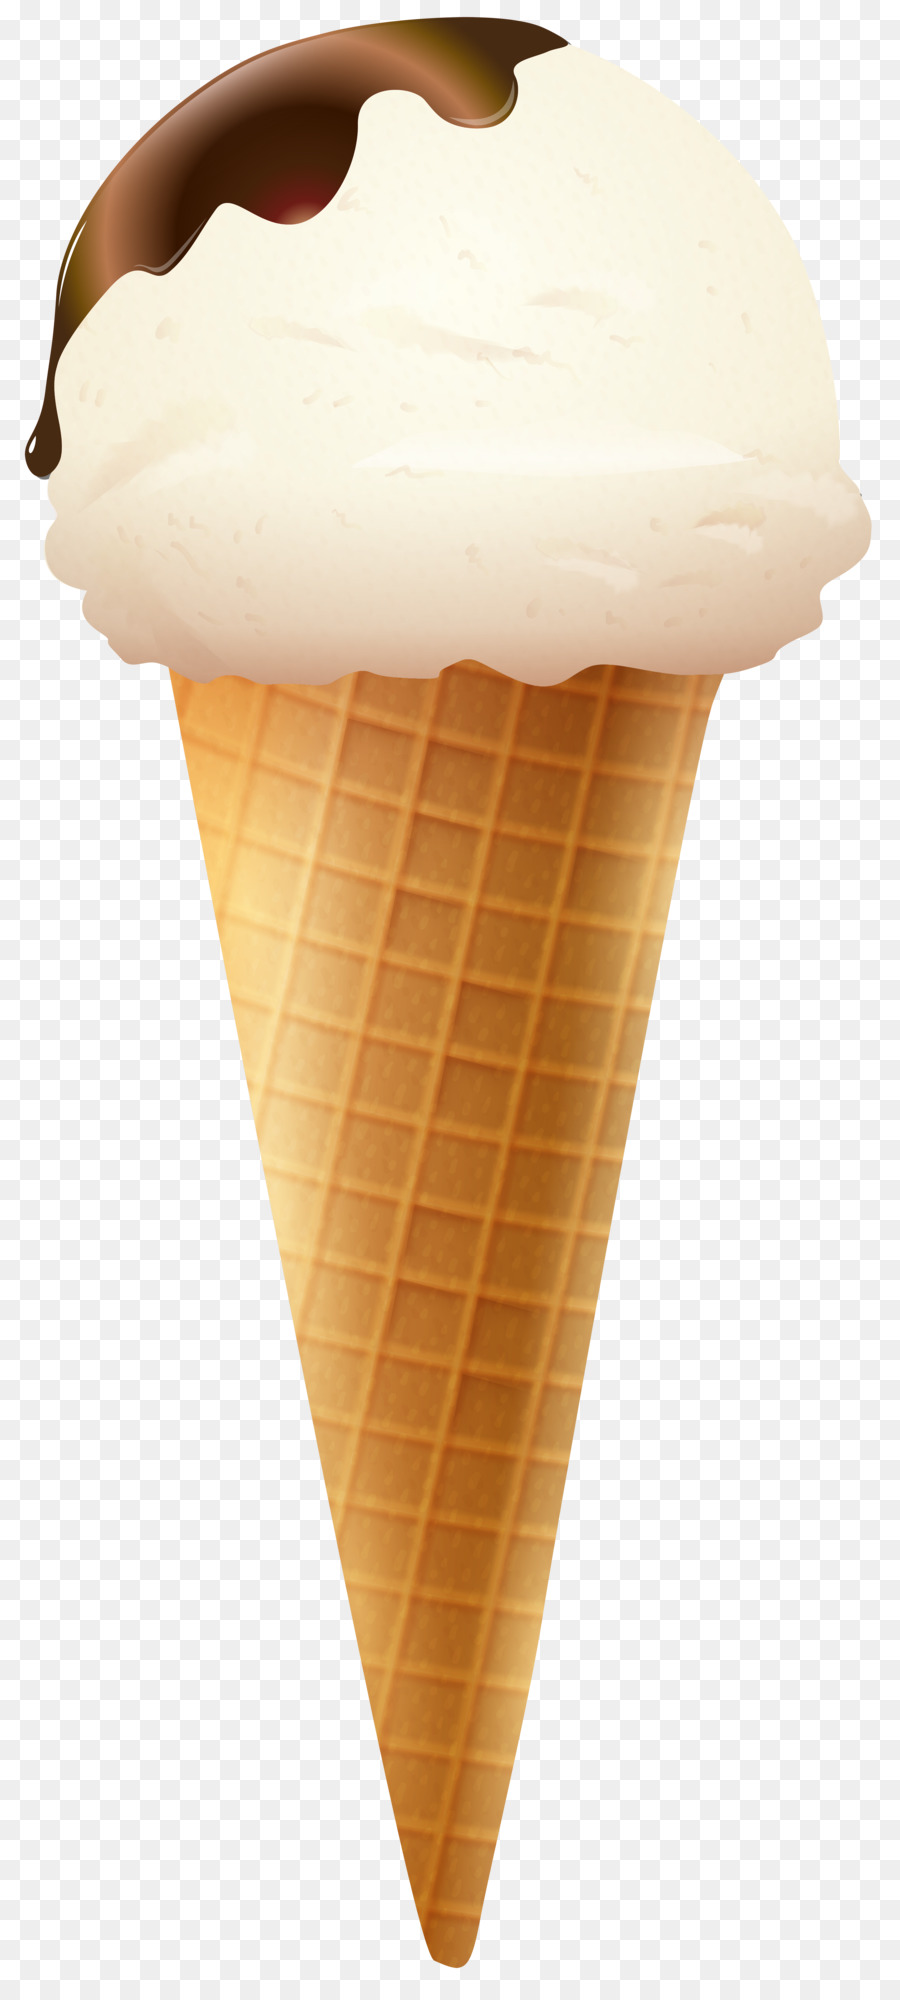 Ice Cream Cones Waffle Chocolate ice cream - ice cream png download - 3601*8000 - Free Transparent Ice Cream png Download.